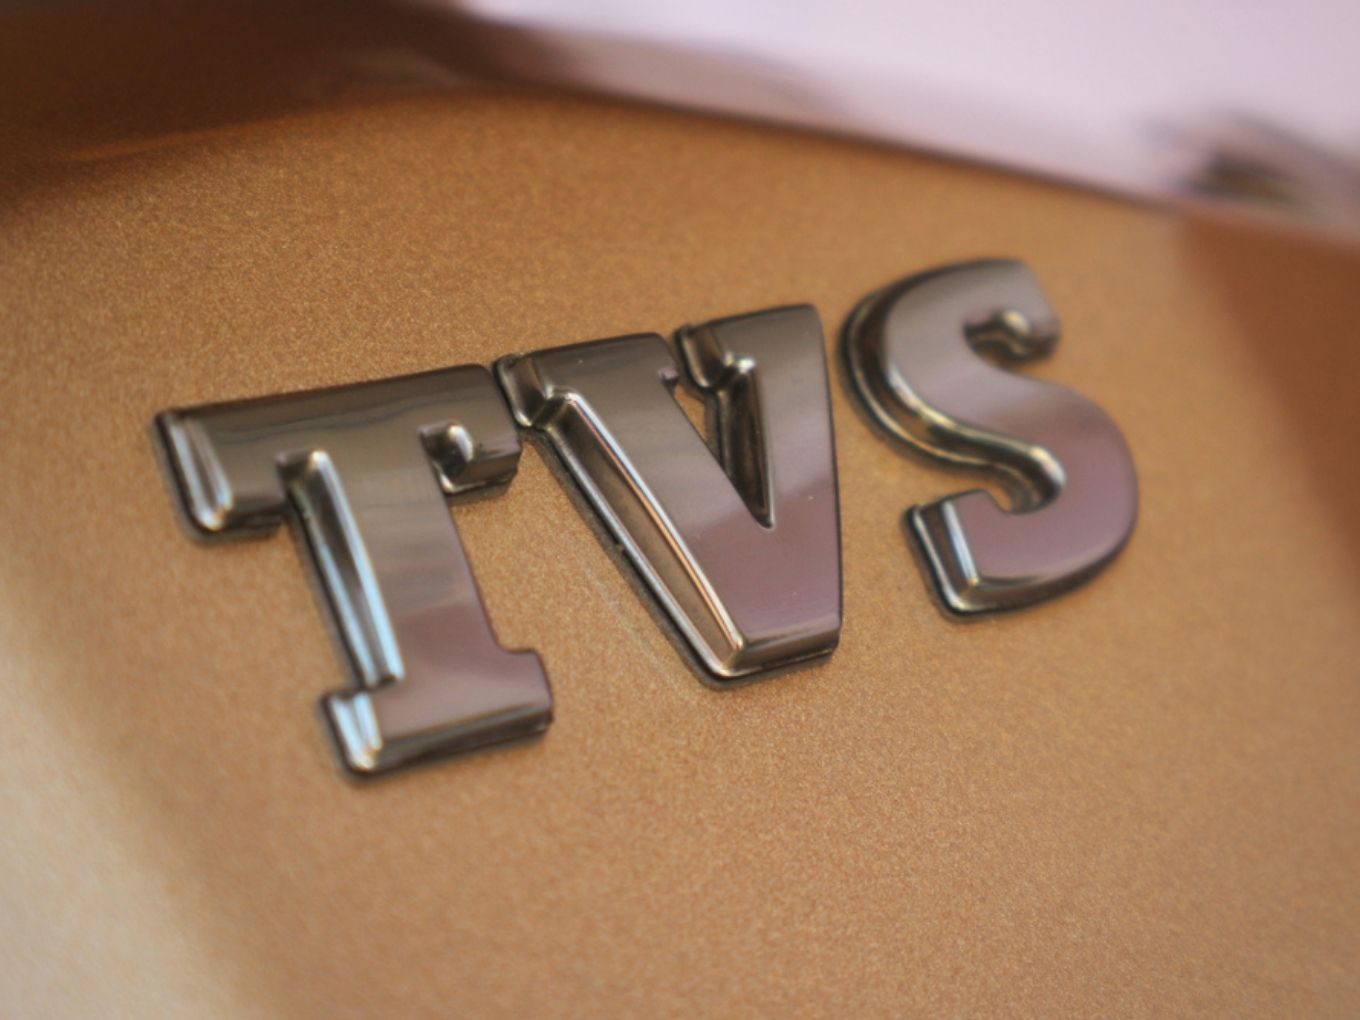 TVS Motors Acquires IoT Solutions Provider Intellicar To Accelerate Digital Initiatives